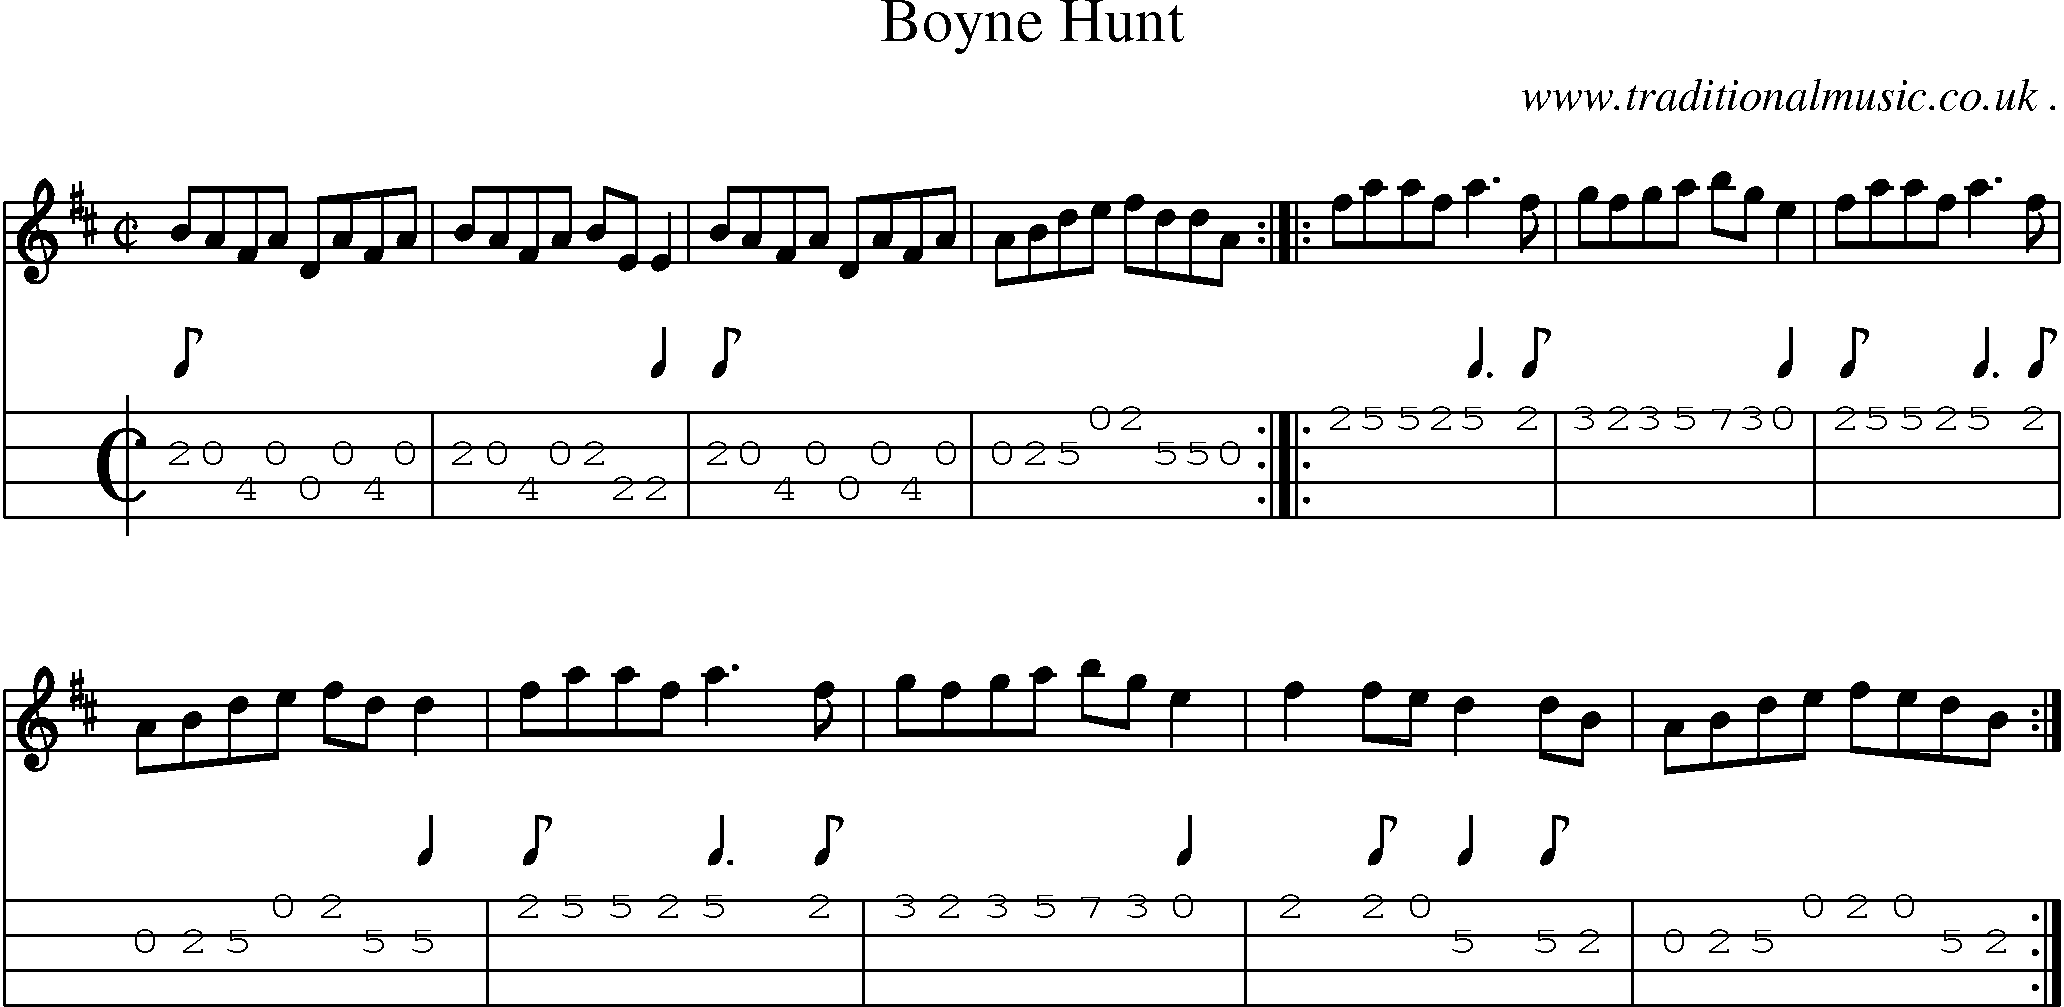 Sheet-Music and Mandolin Tabs for Boyne Hunt